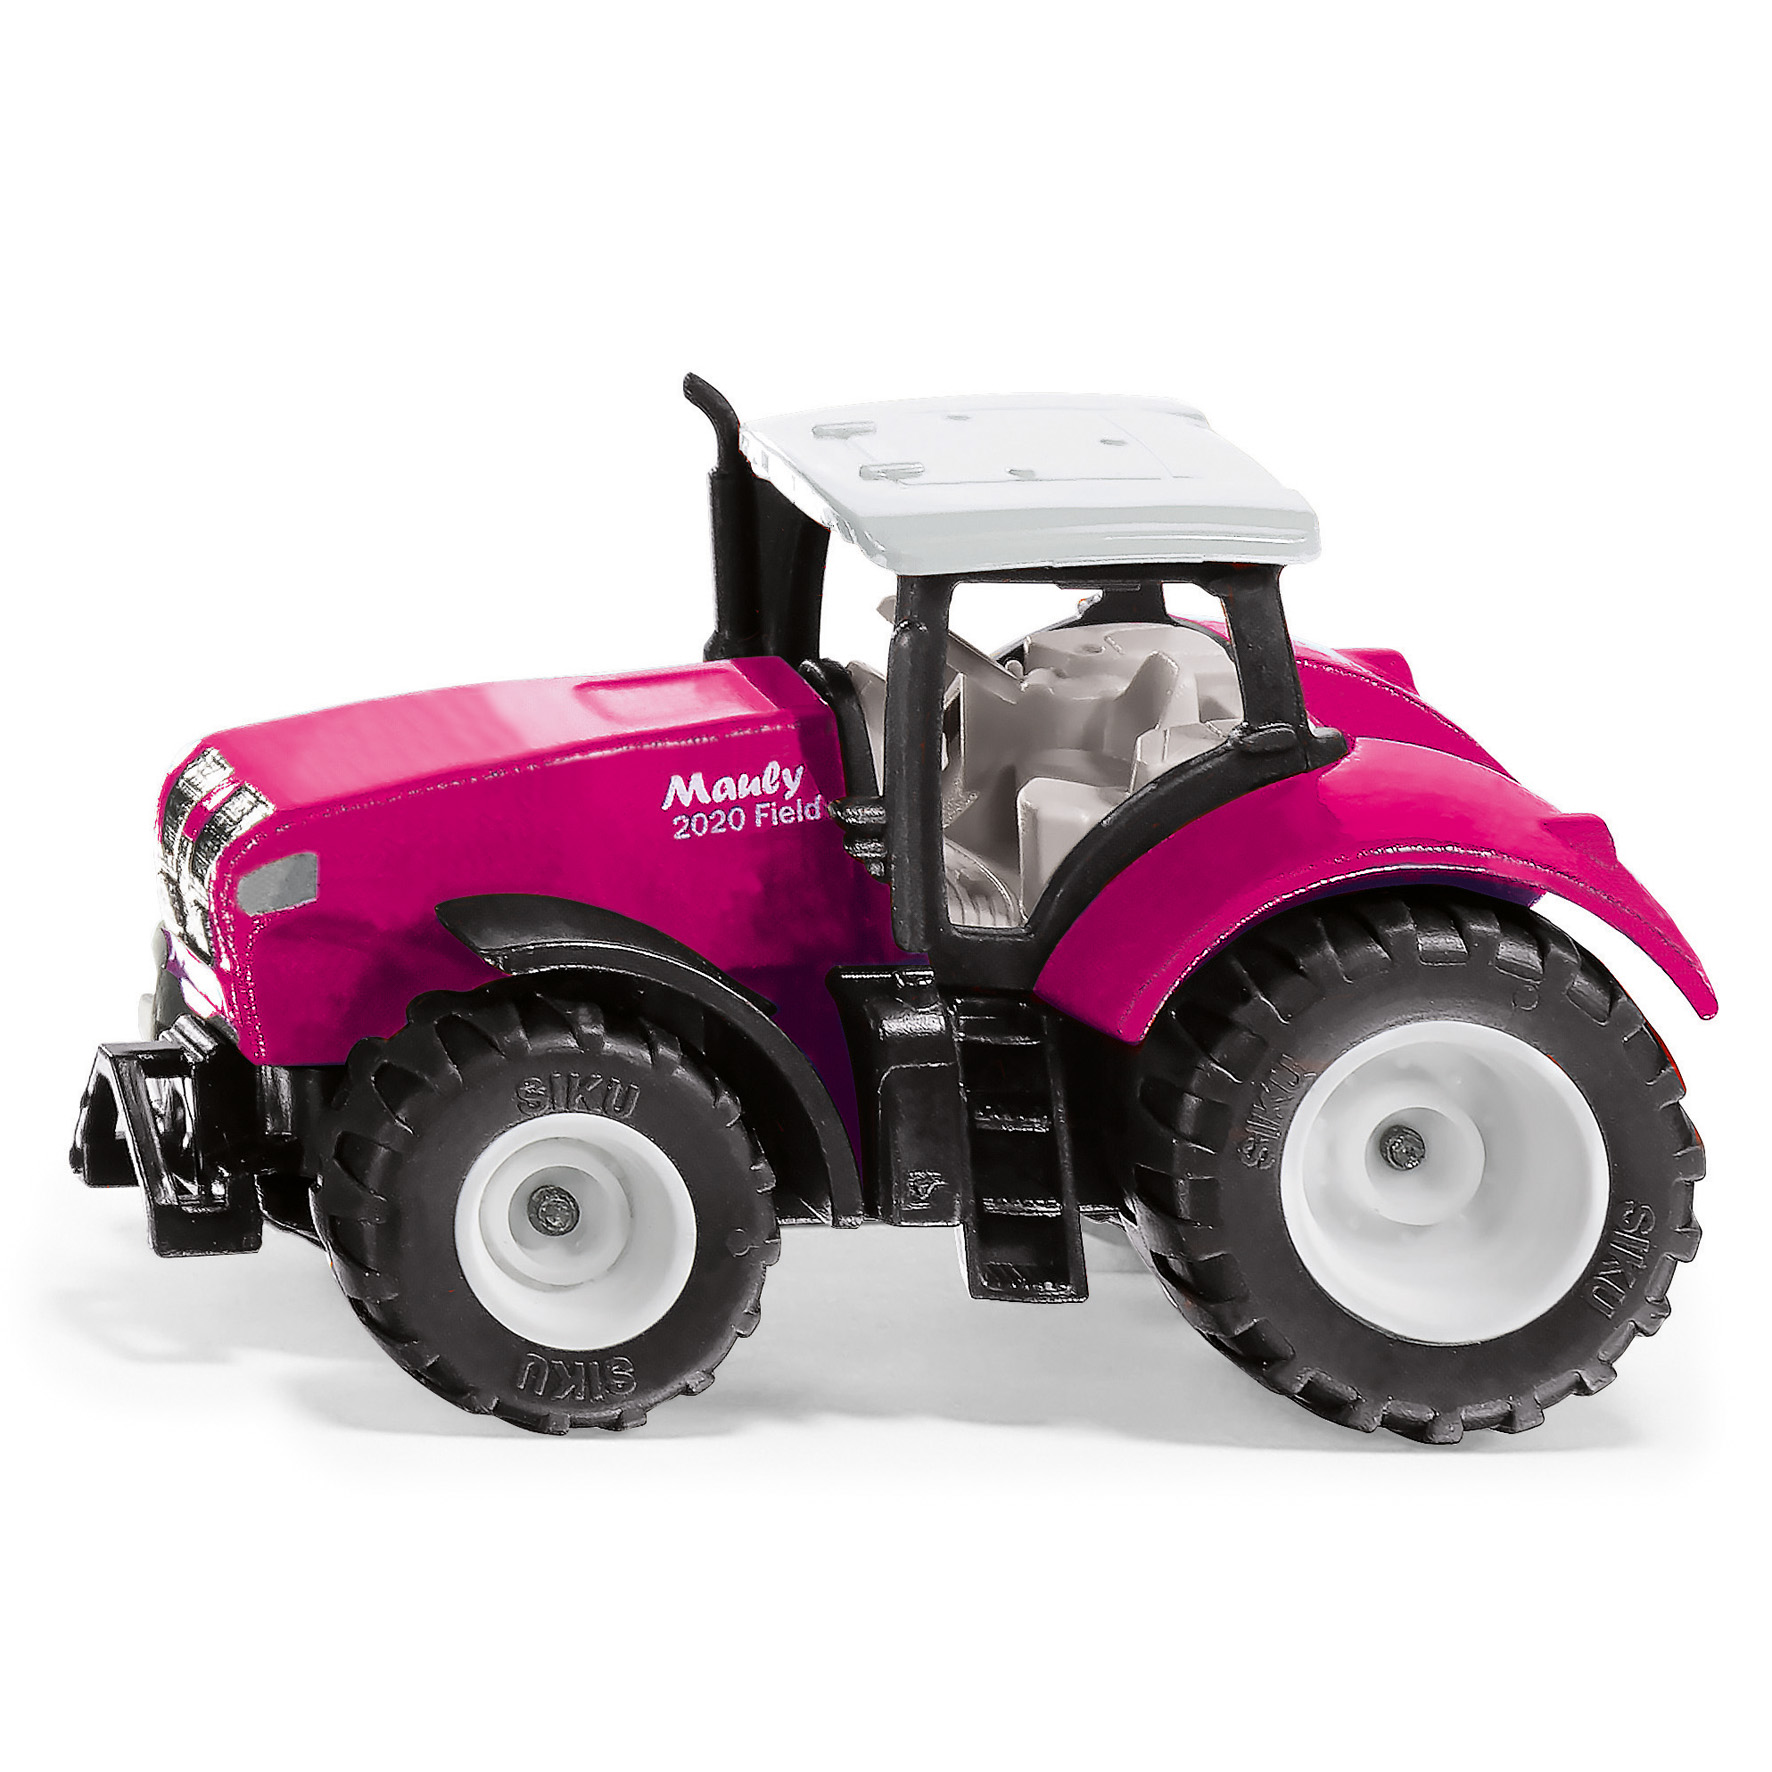 Traktorer & Landbrukskjøretøy mauly x540 tractor pink